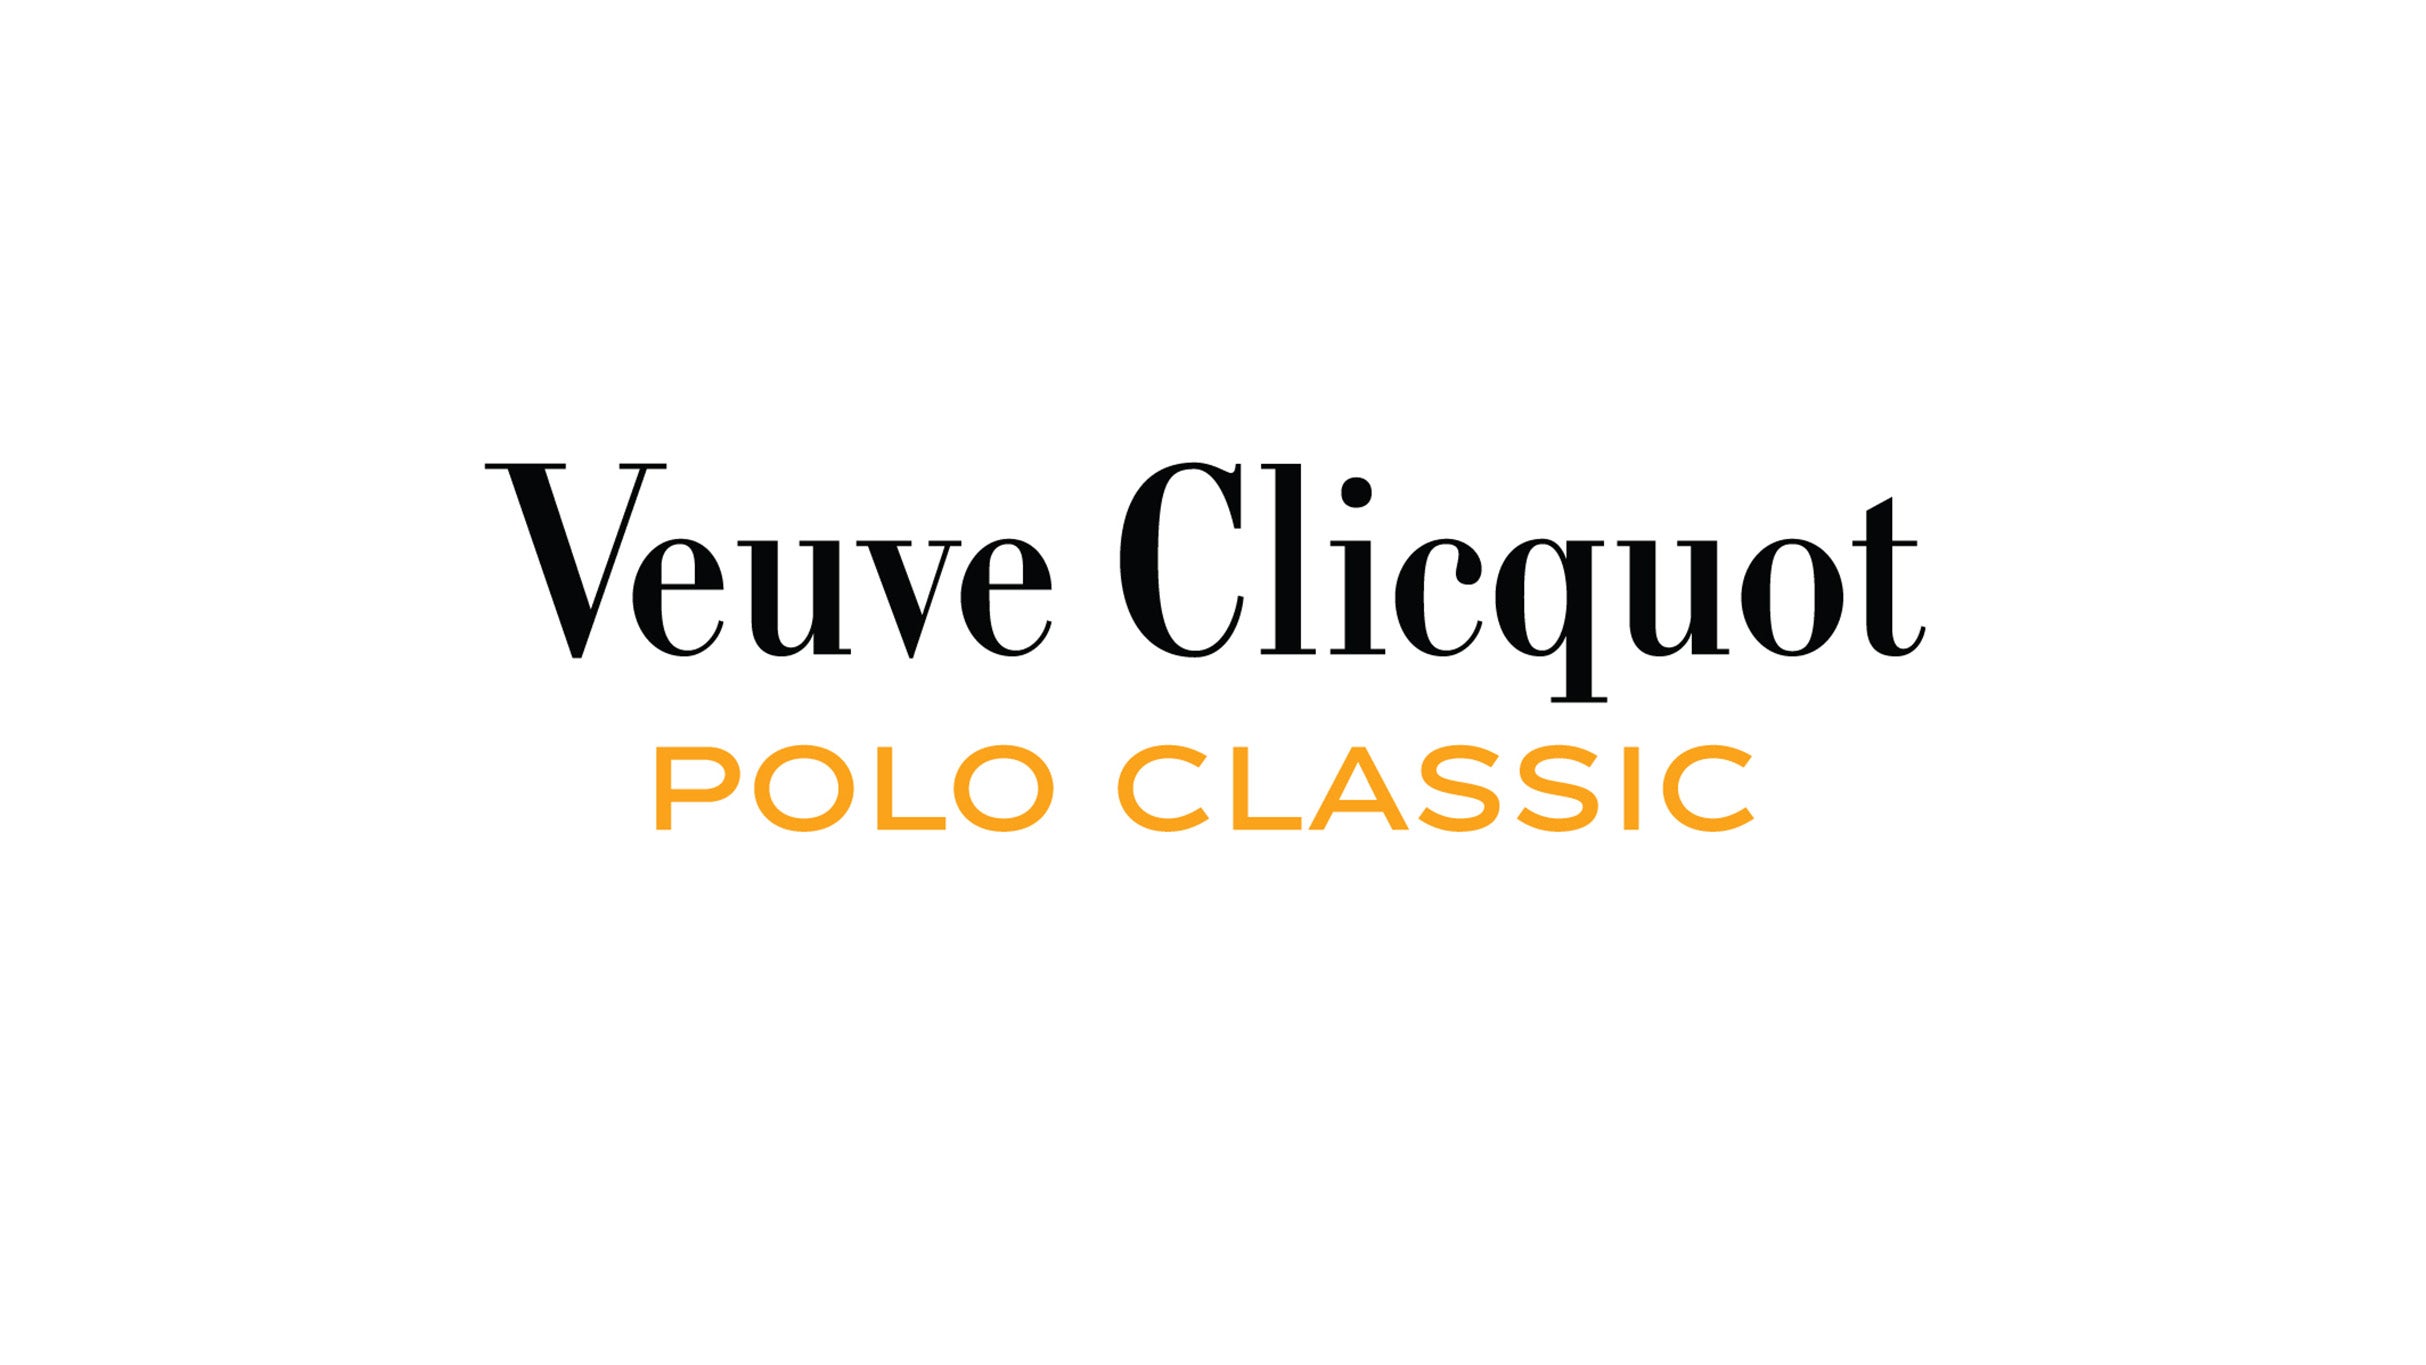 Veuve Clicquot Polo Classic presale information on freepresalepasswords.com